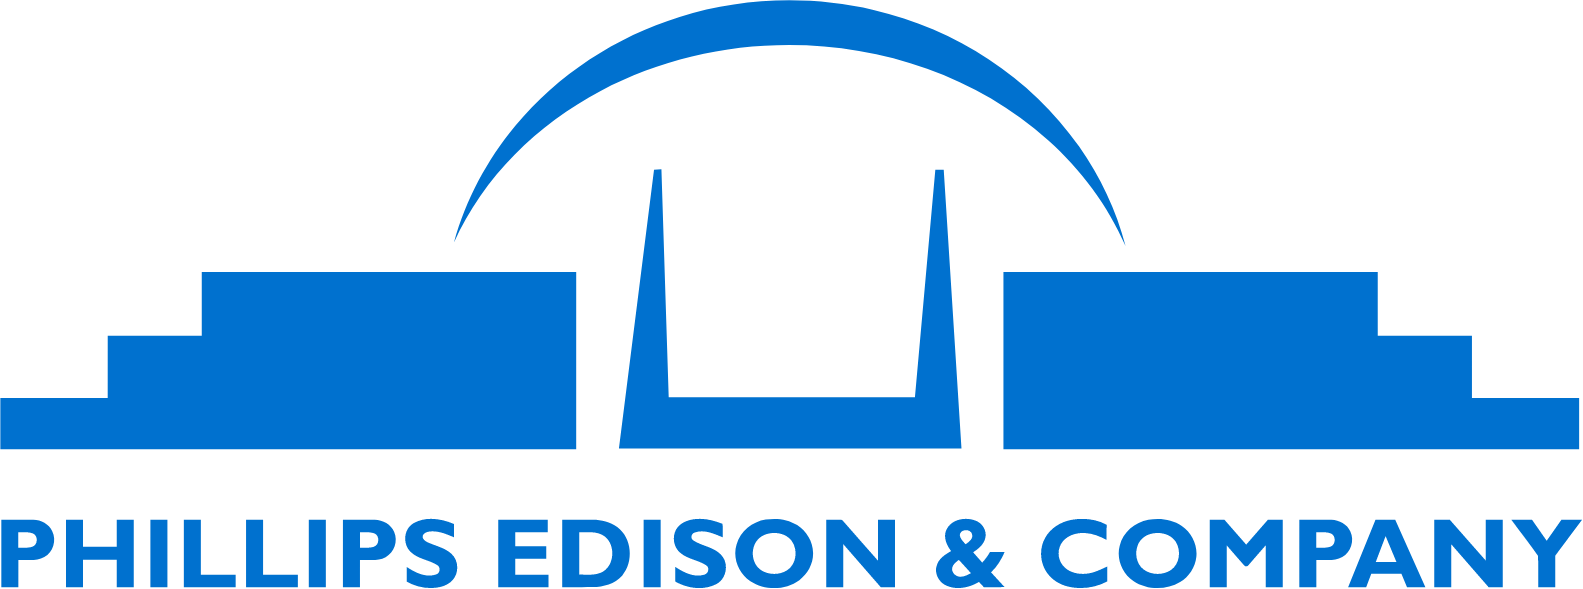 Phillips Edison & Company logo large (transparent PNG)